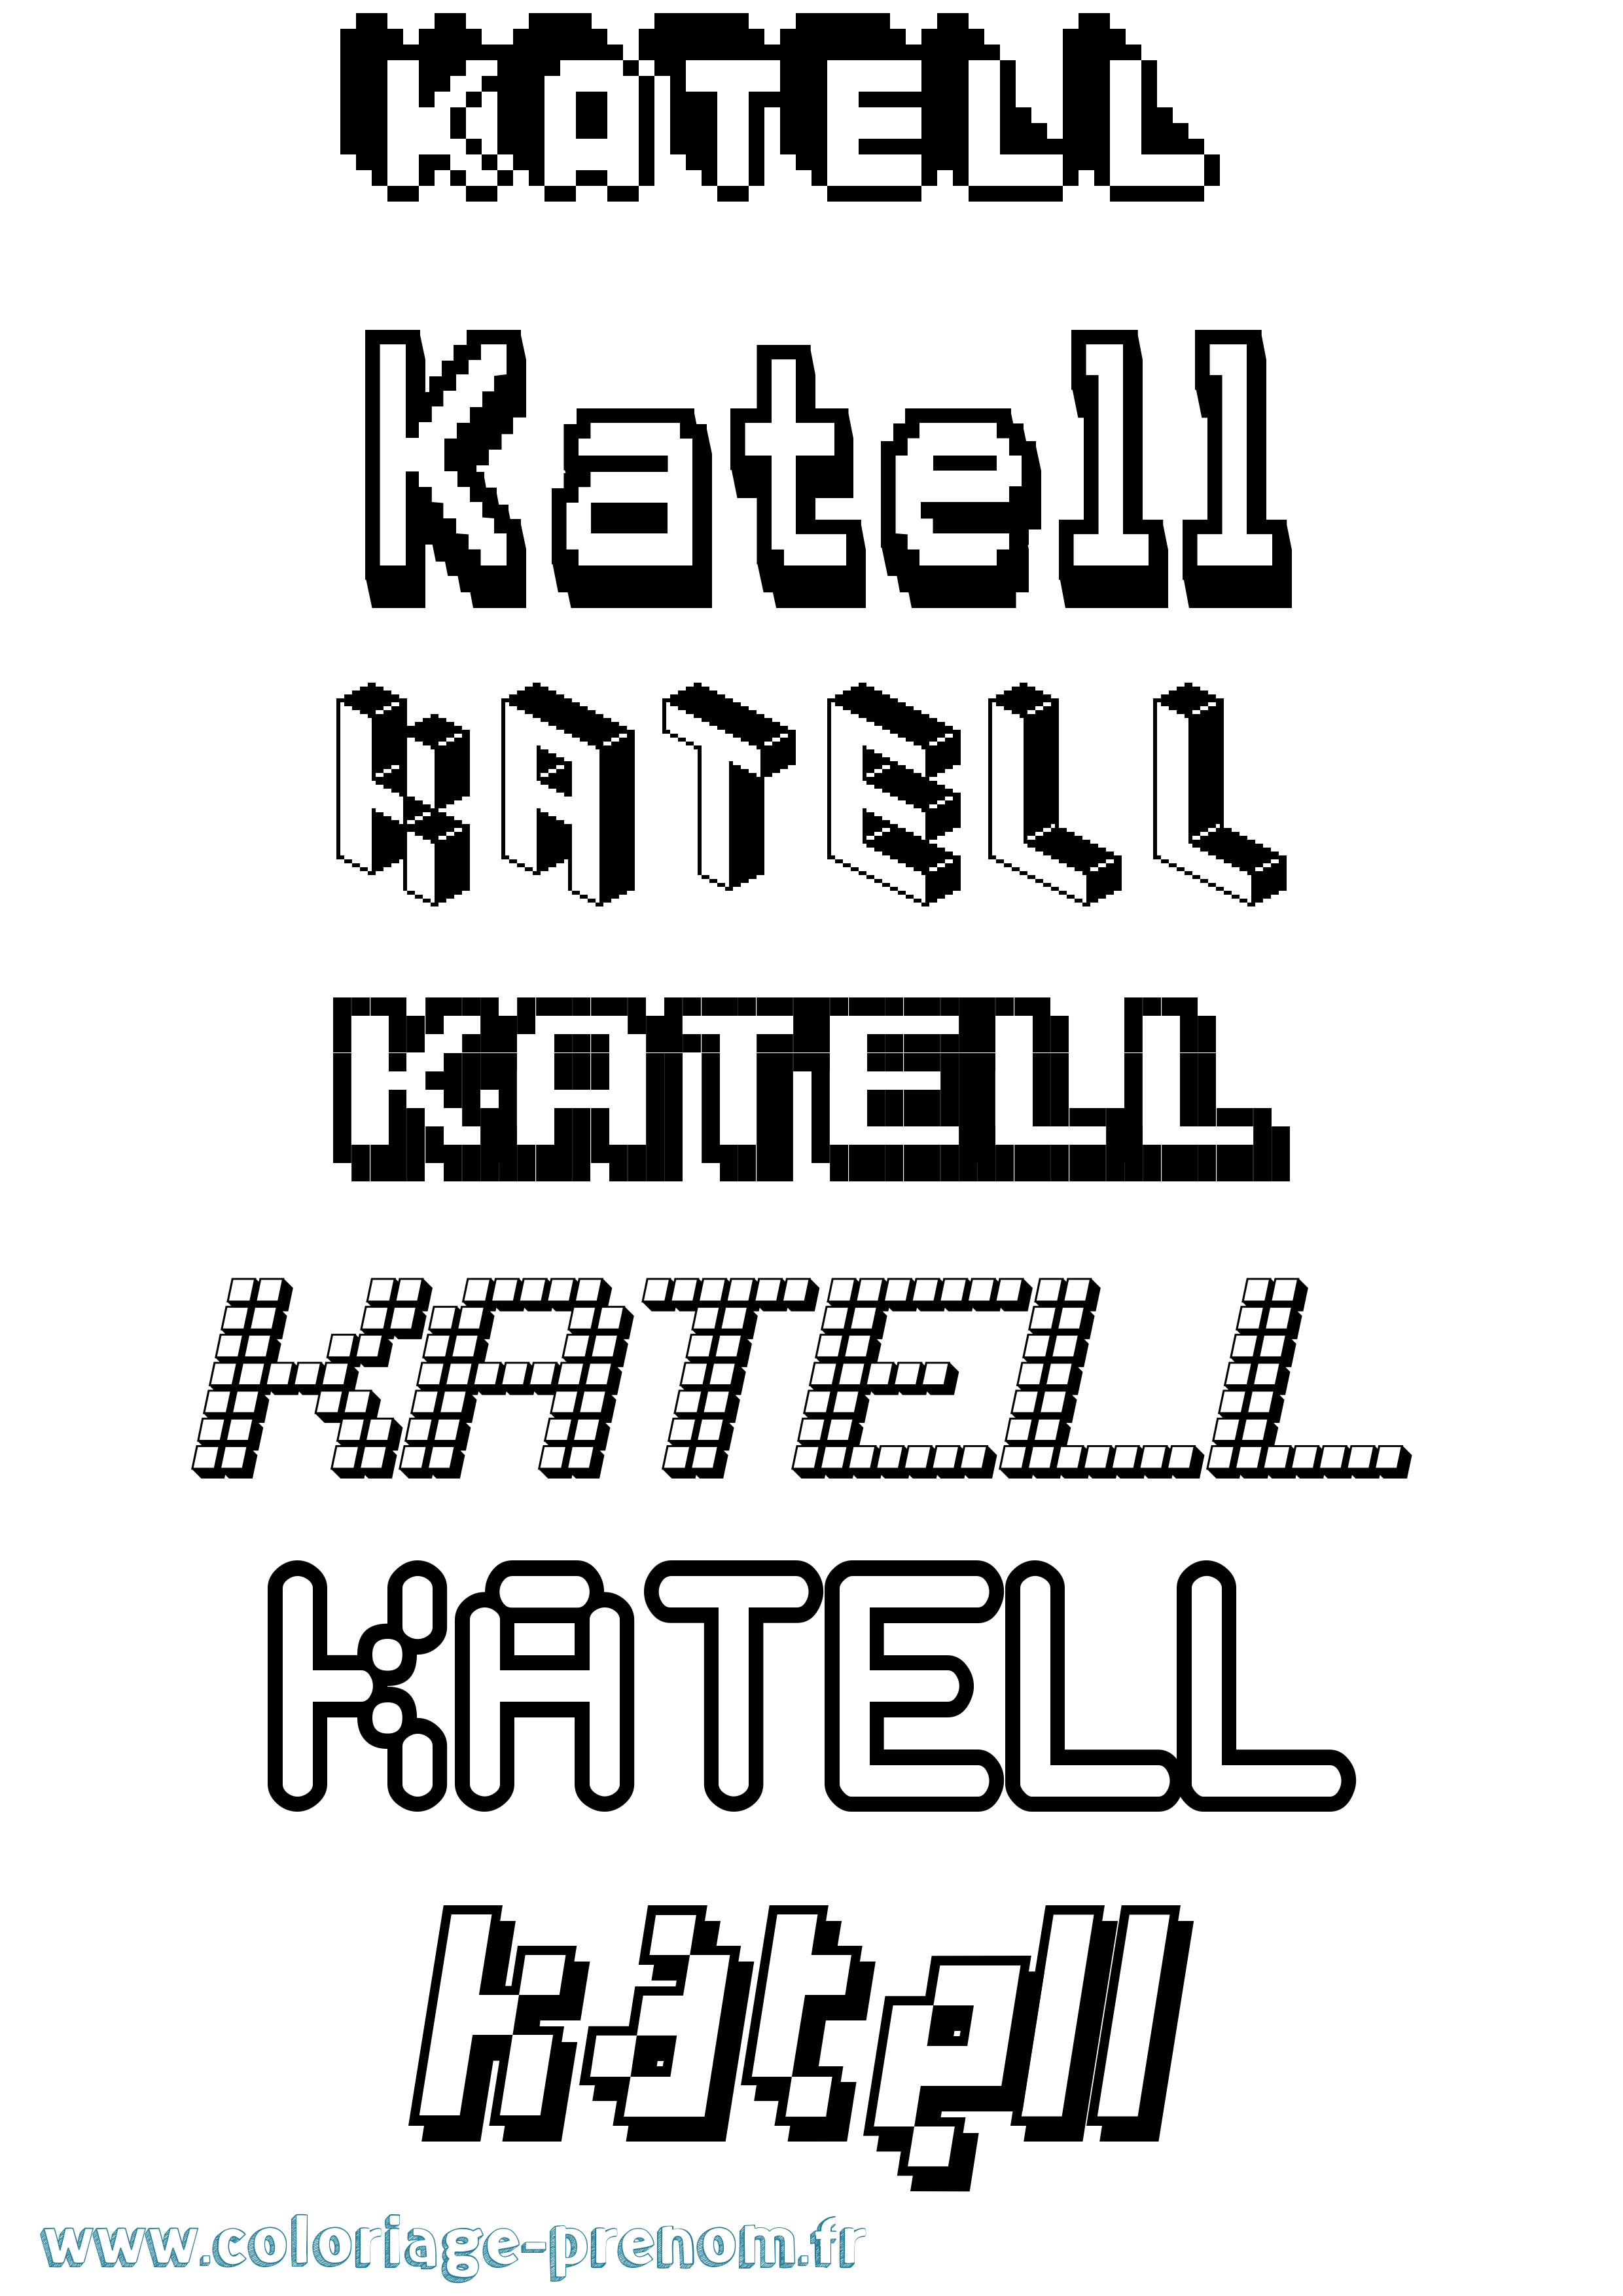 Coloriage prénom Katell Pixel